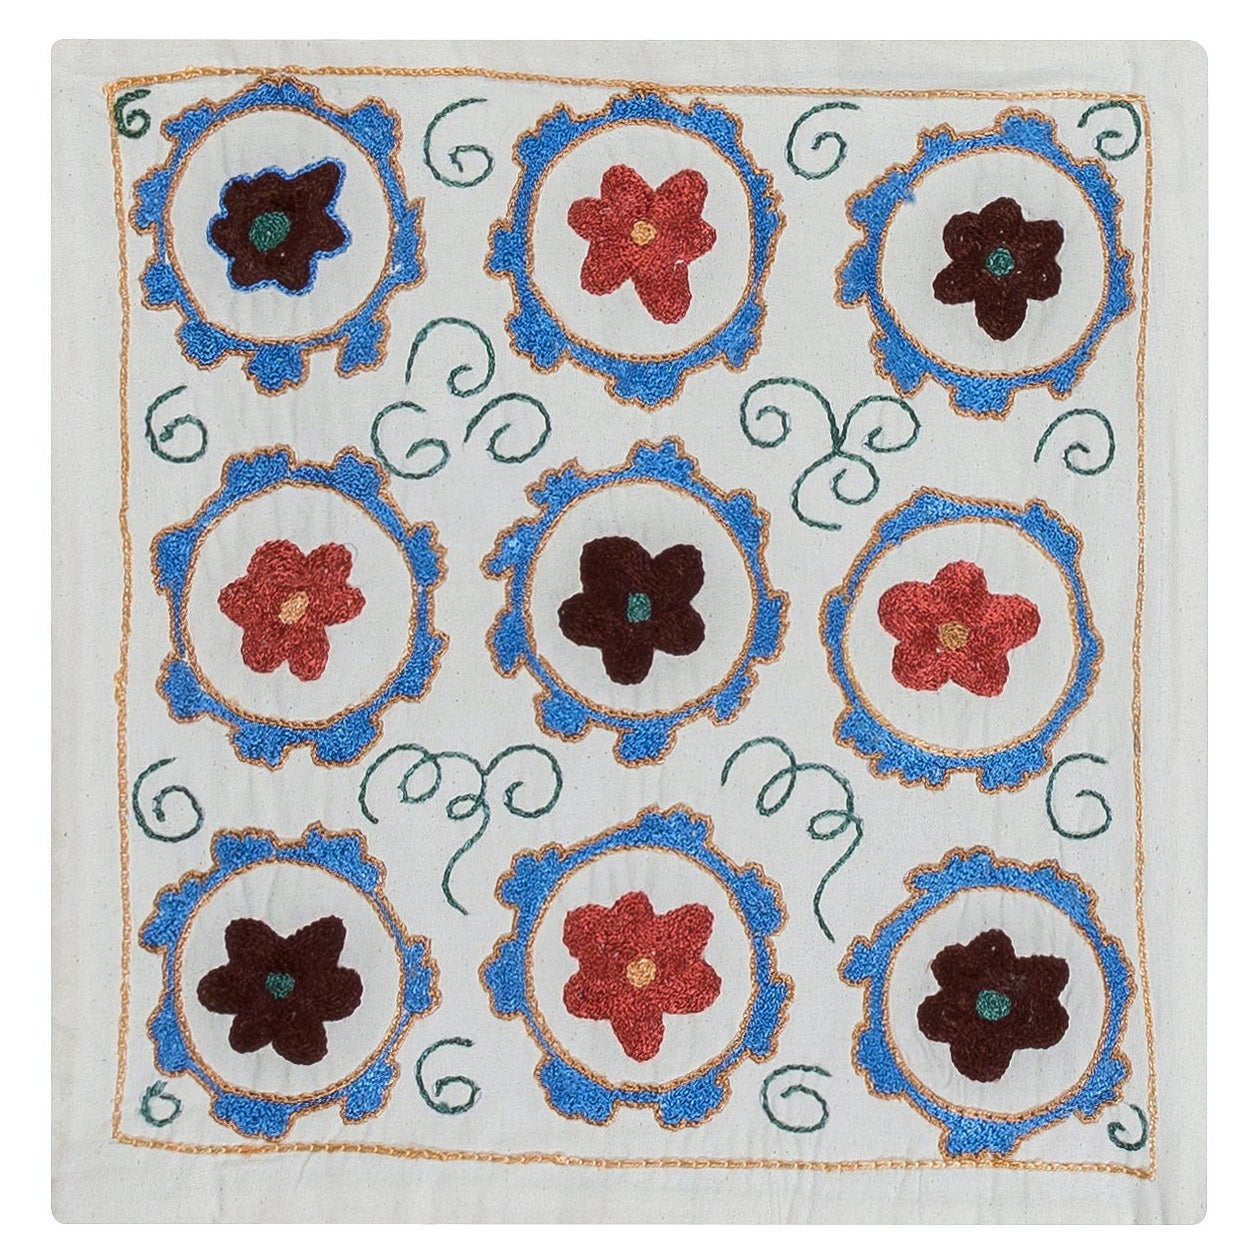 Uzbek Silk Embroidery Lace Pillow Cover, Floral Handmade Suzani Pillow